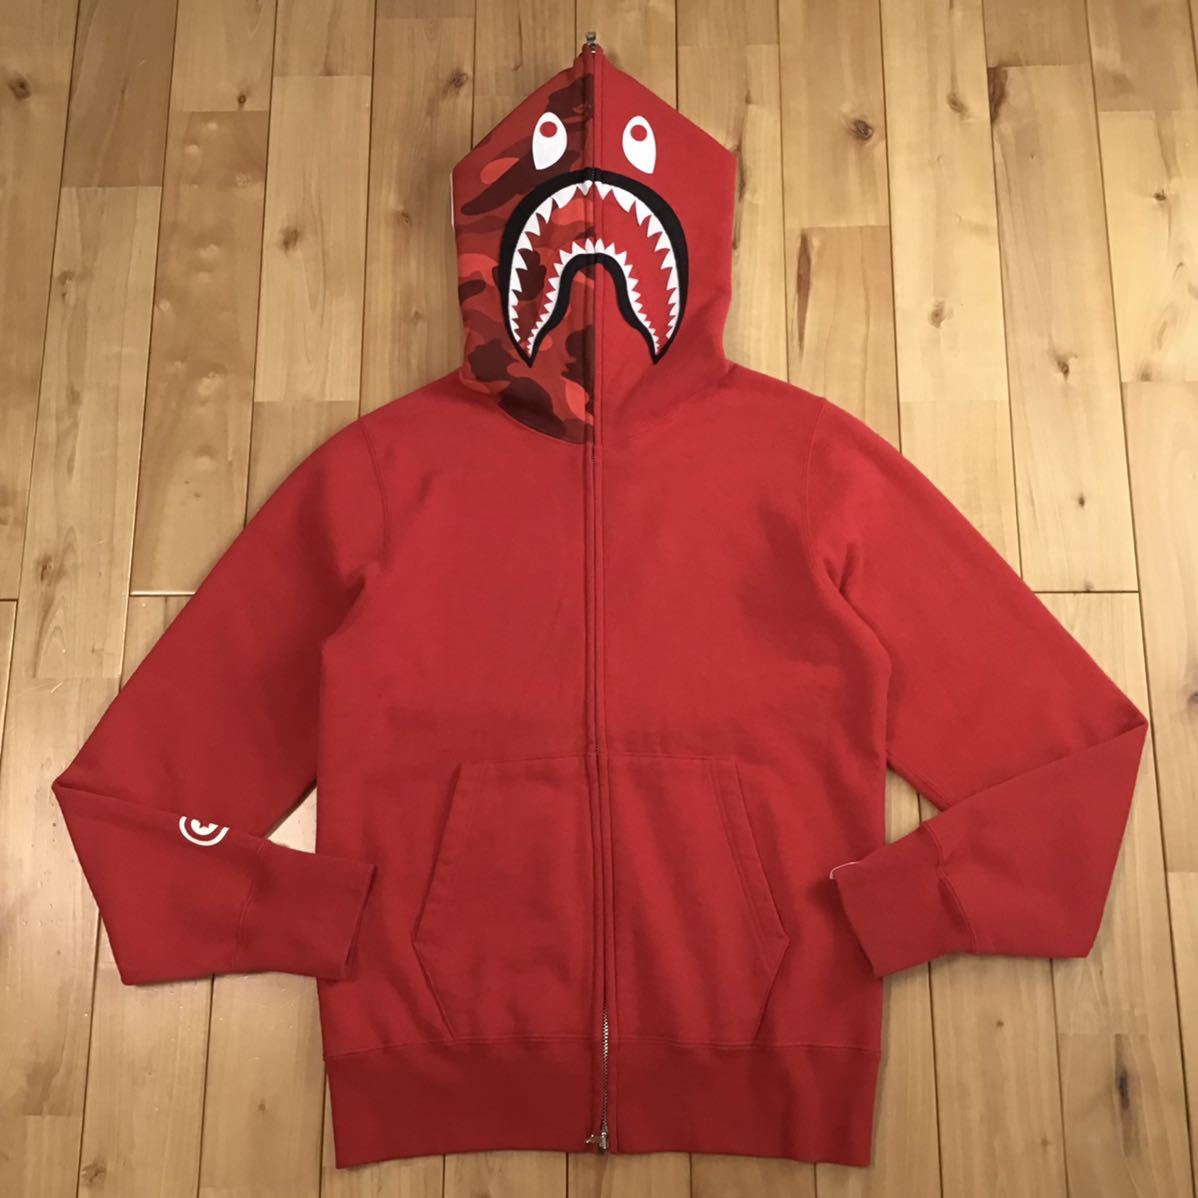 Red camo シャーク パーカー Sサイズ shark full zip hoodie a bathing